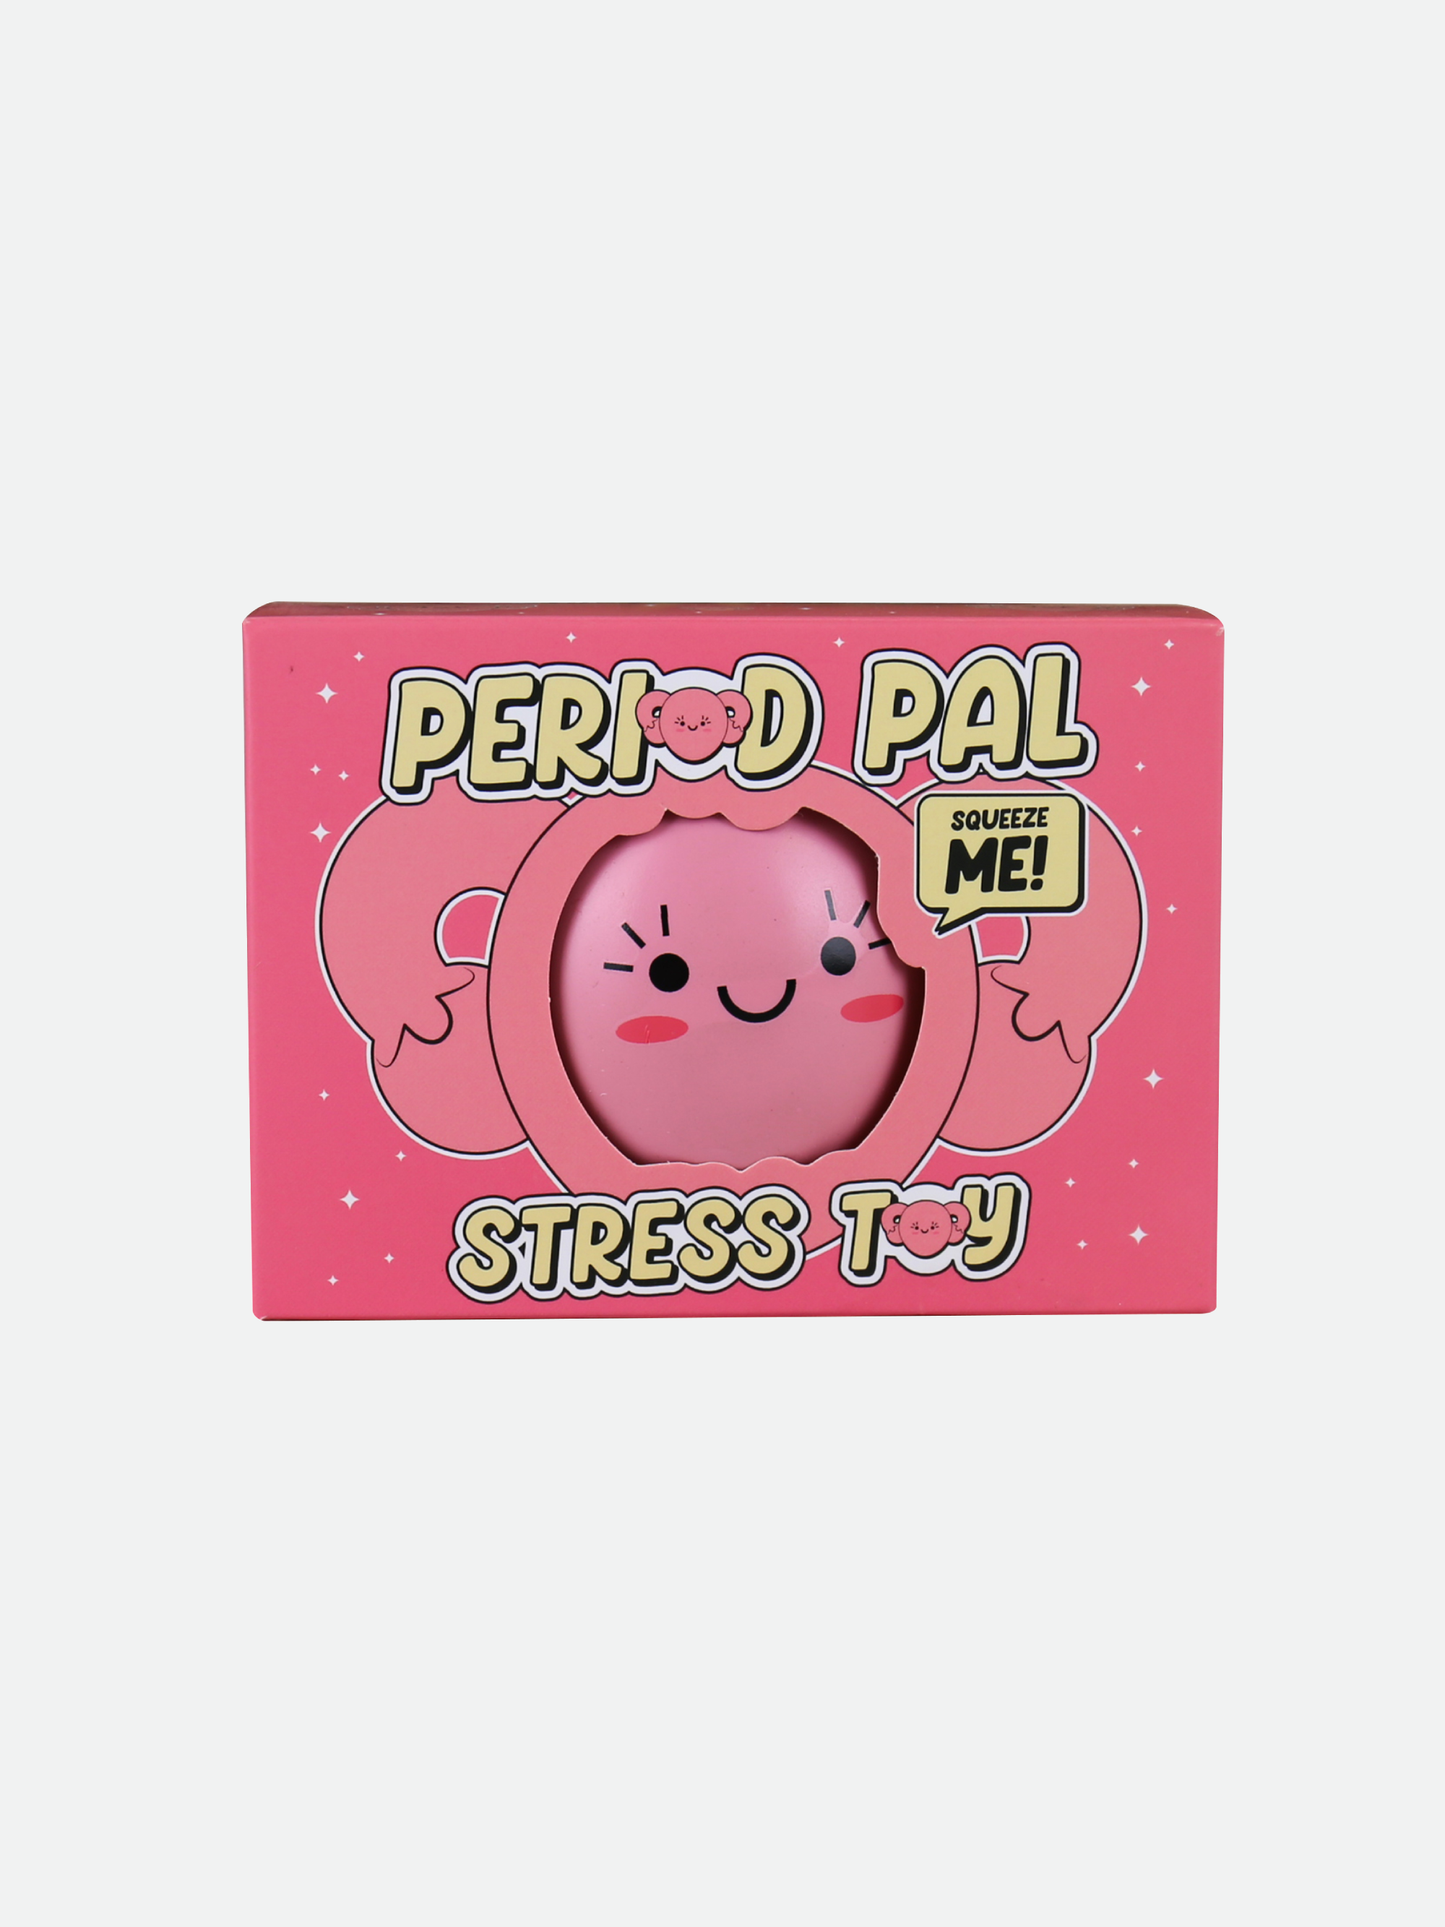 Period Stressball